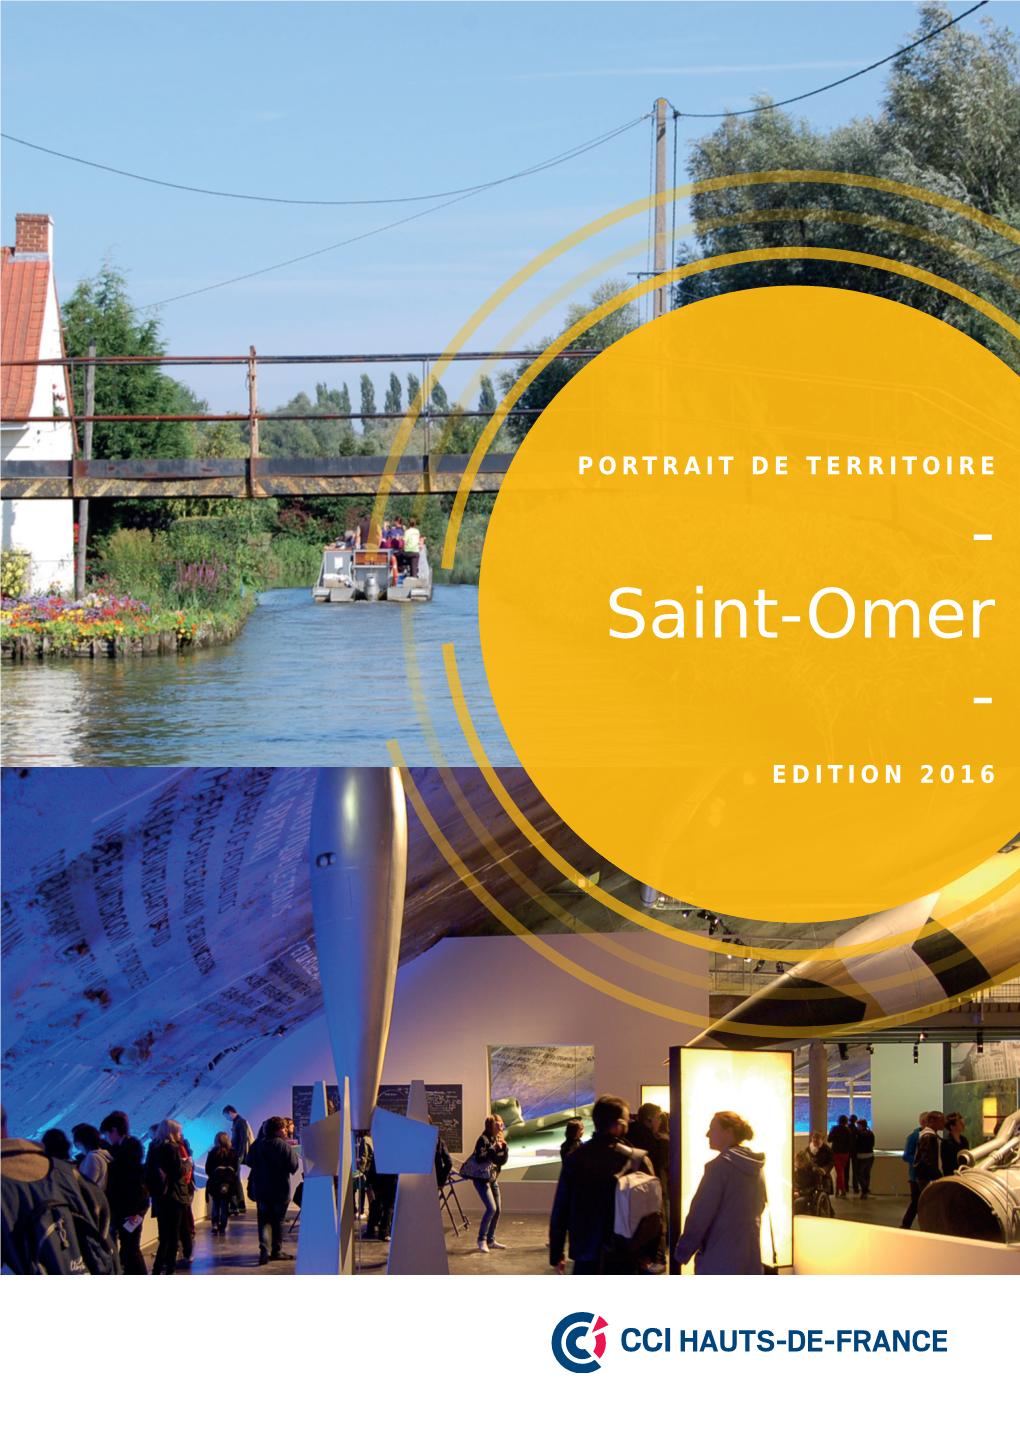 Saint-Omer - Edition 2016 Les Habitants